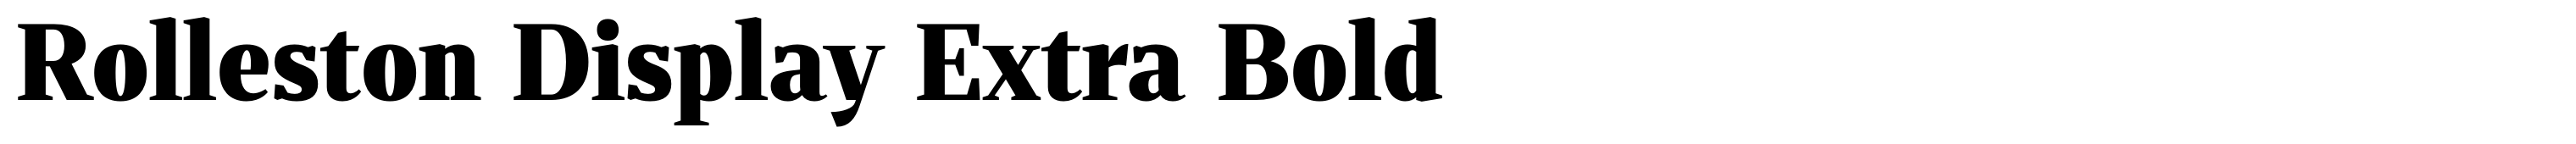 Rolleston Display Extra Bold